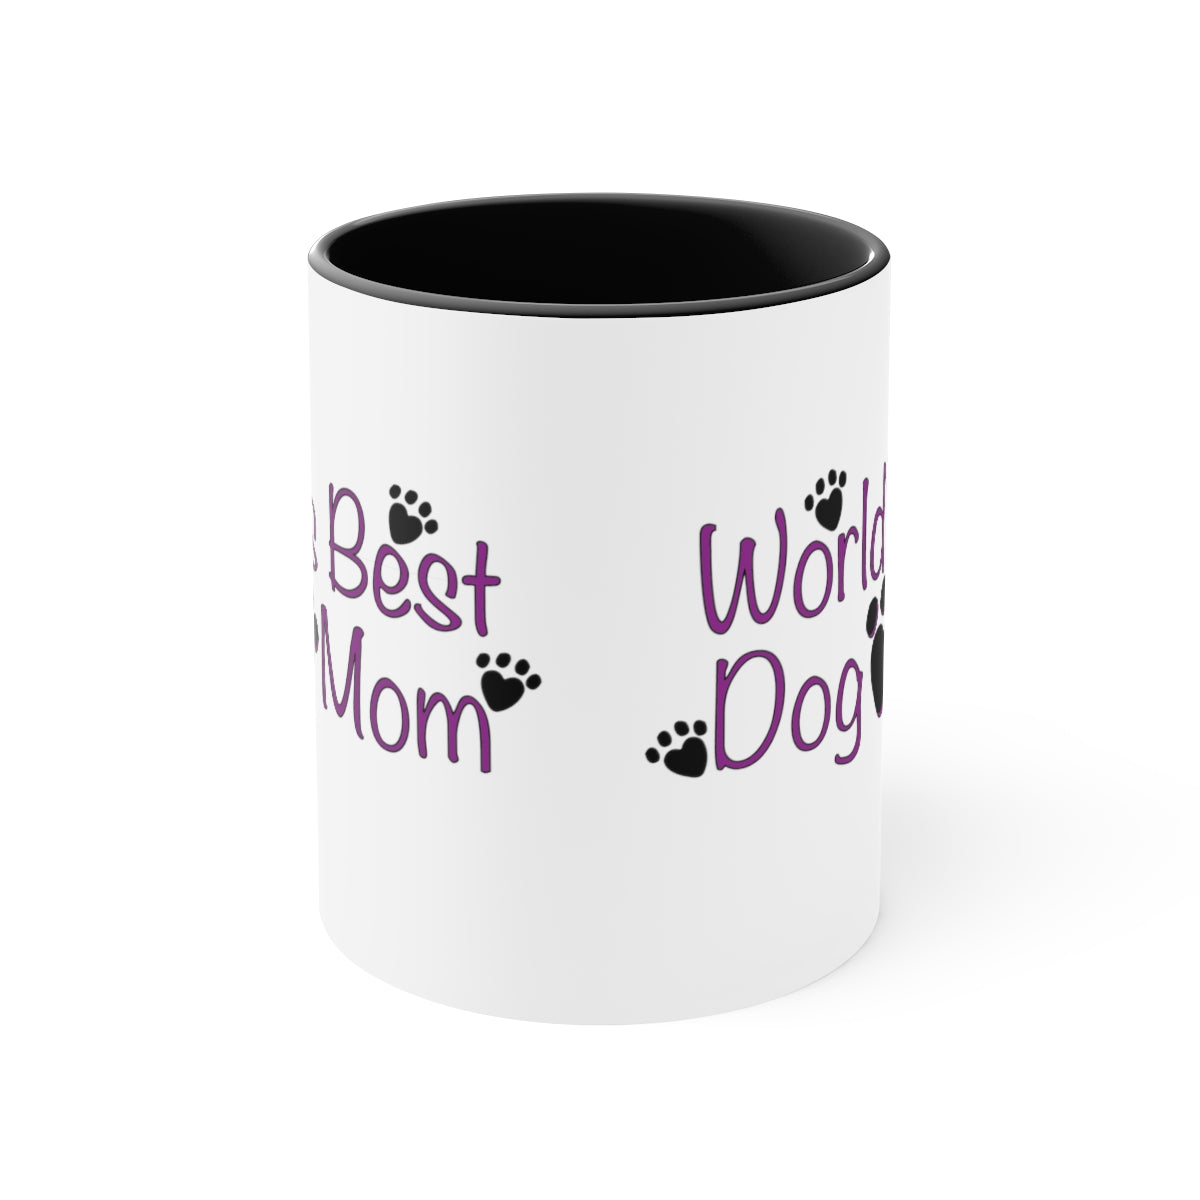 Worlds Best Dog Mom Accent Mug